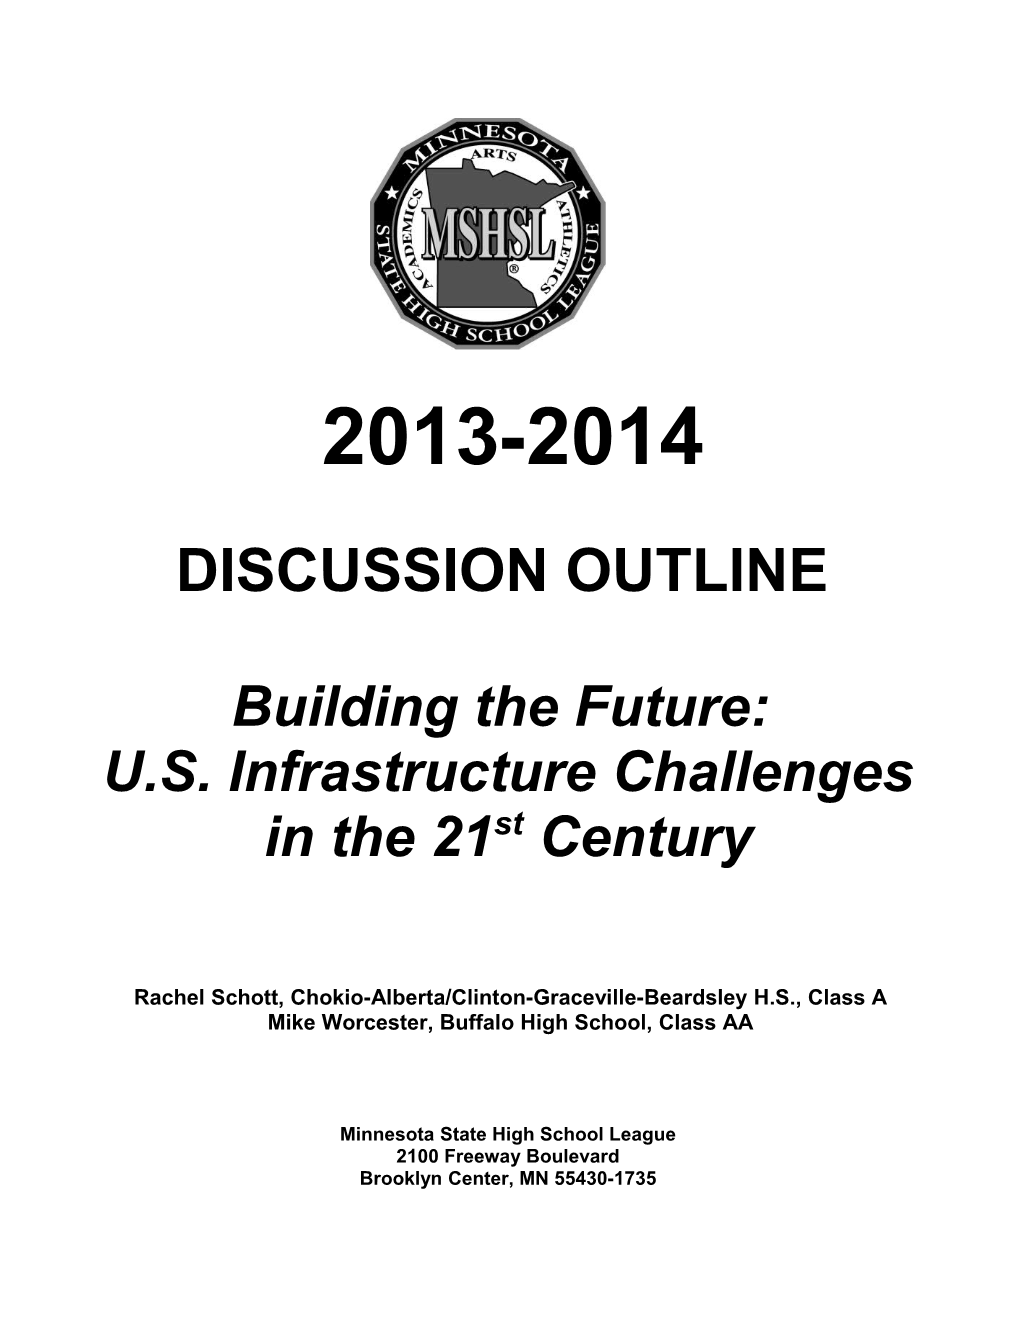 U.S. Infrastructure Challenges in the 21St Century